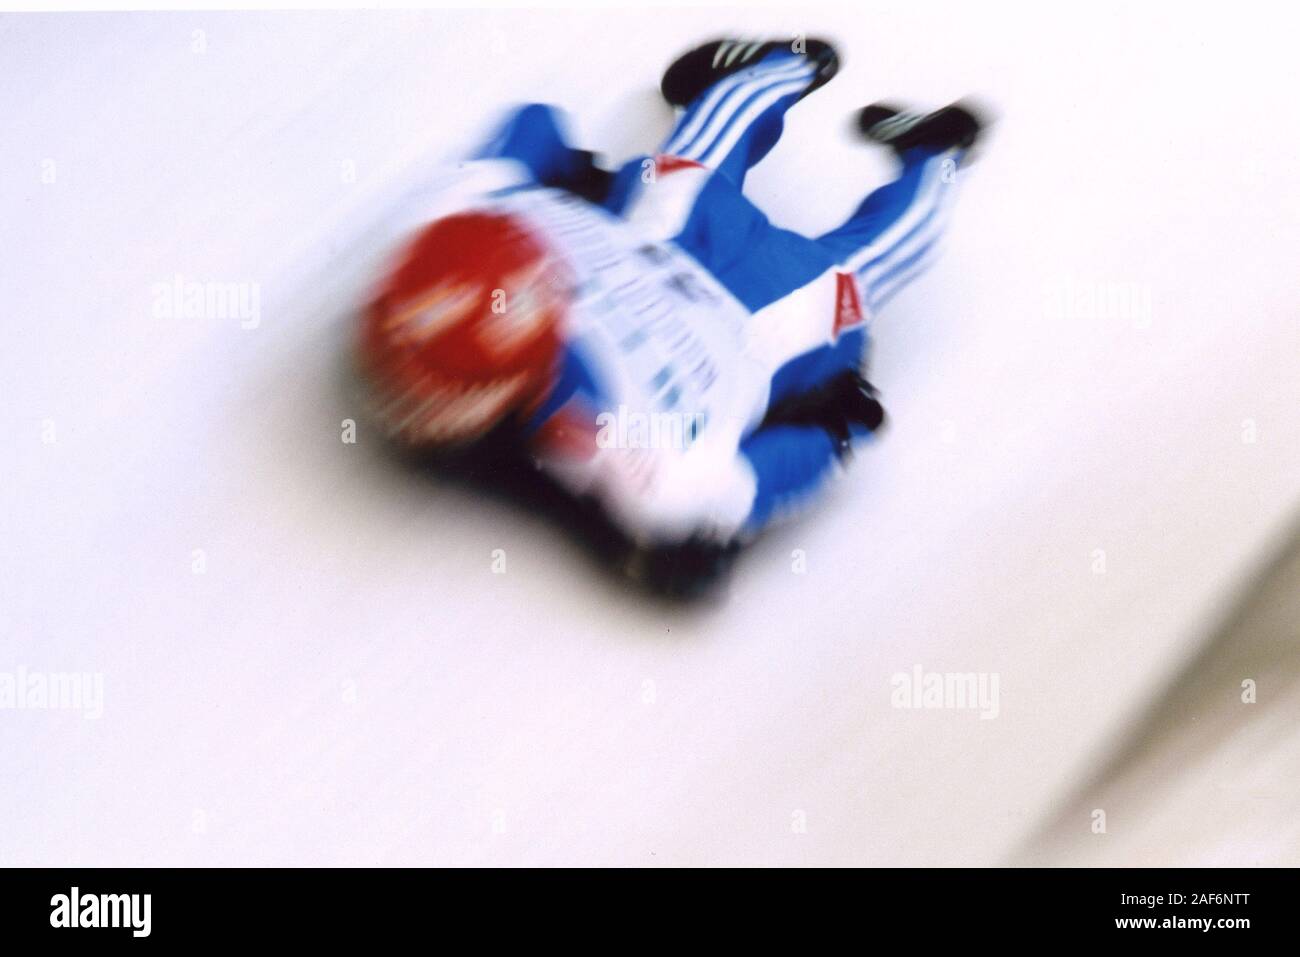 Skeleton, winter olympic discipline. Torino 2006, XX Olympic Winter Games Stock Photo